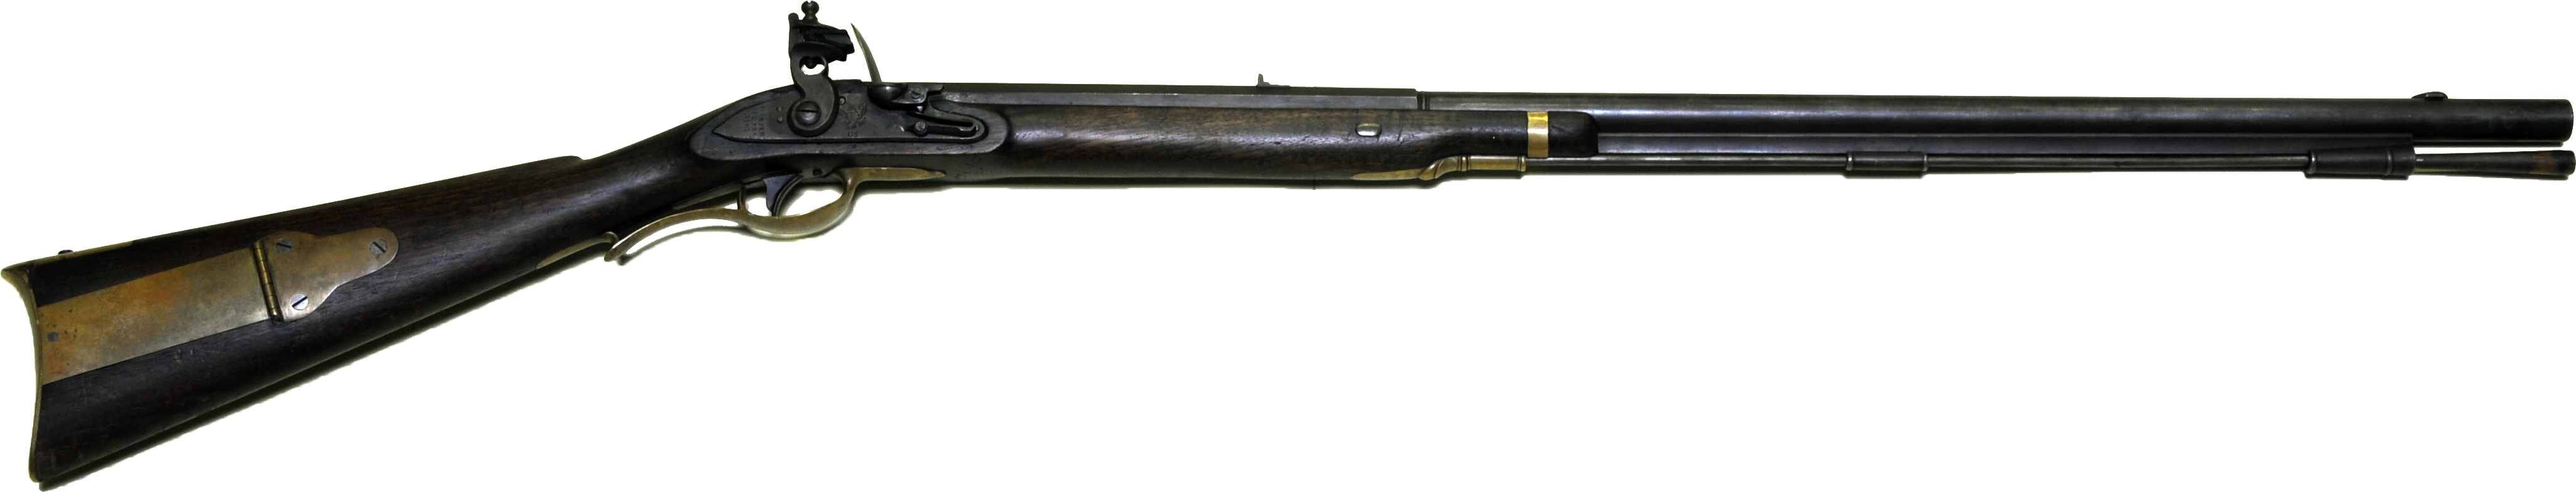 4108x785 > Harper's Ferry Model 1803 Rifle Wallpapers